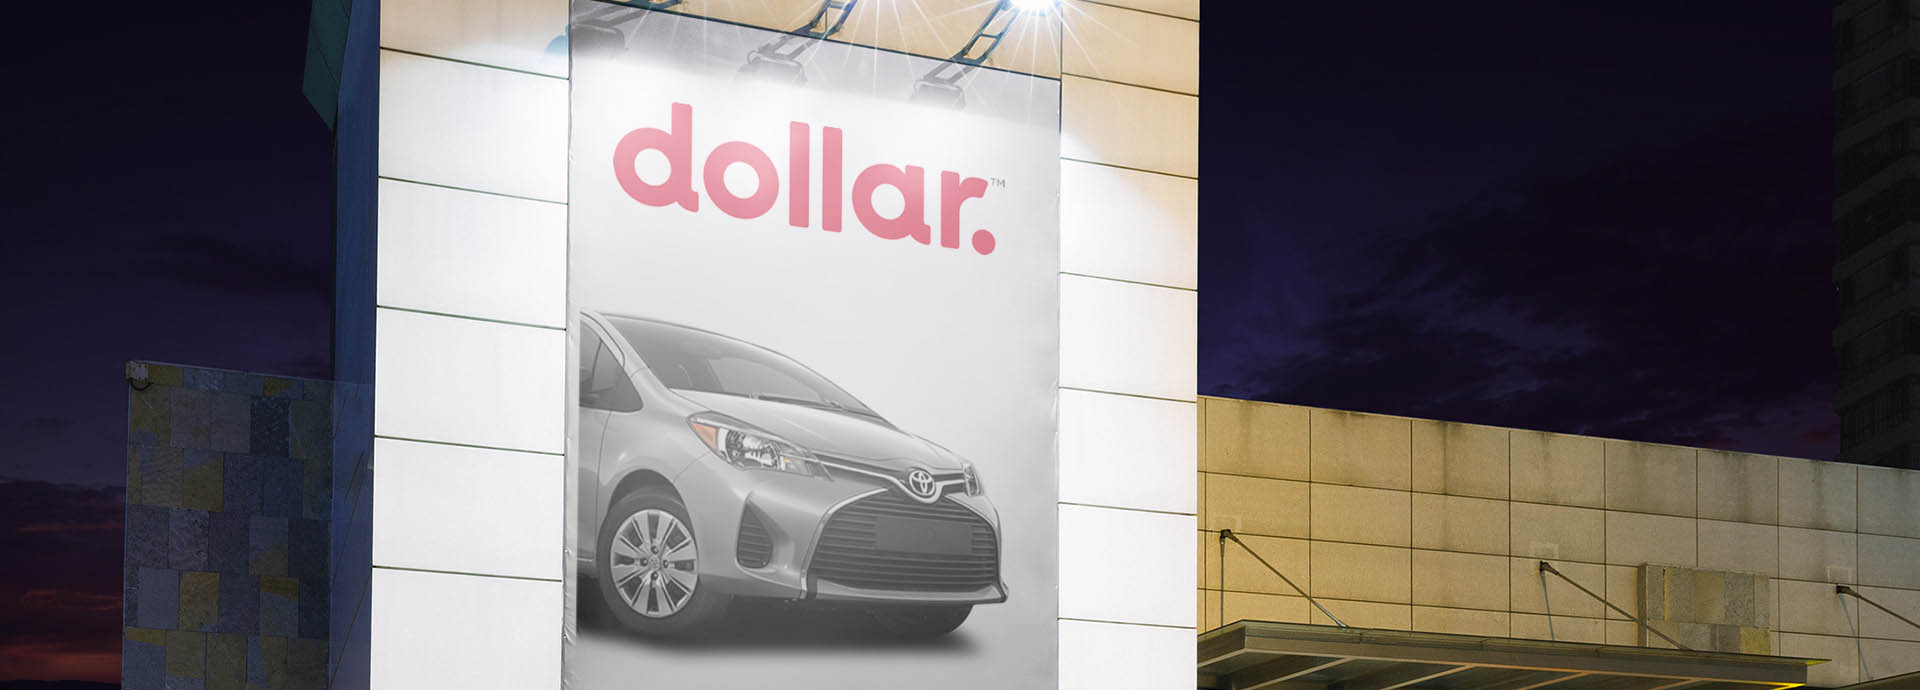 Dollar Rent a Car | Alquiler de carros | RentingCarz Colombia